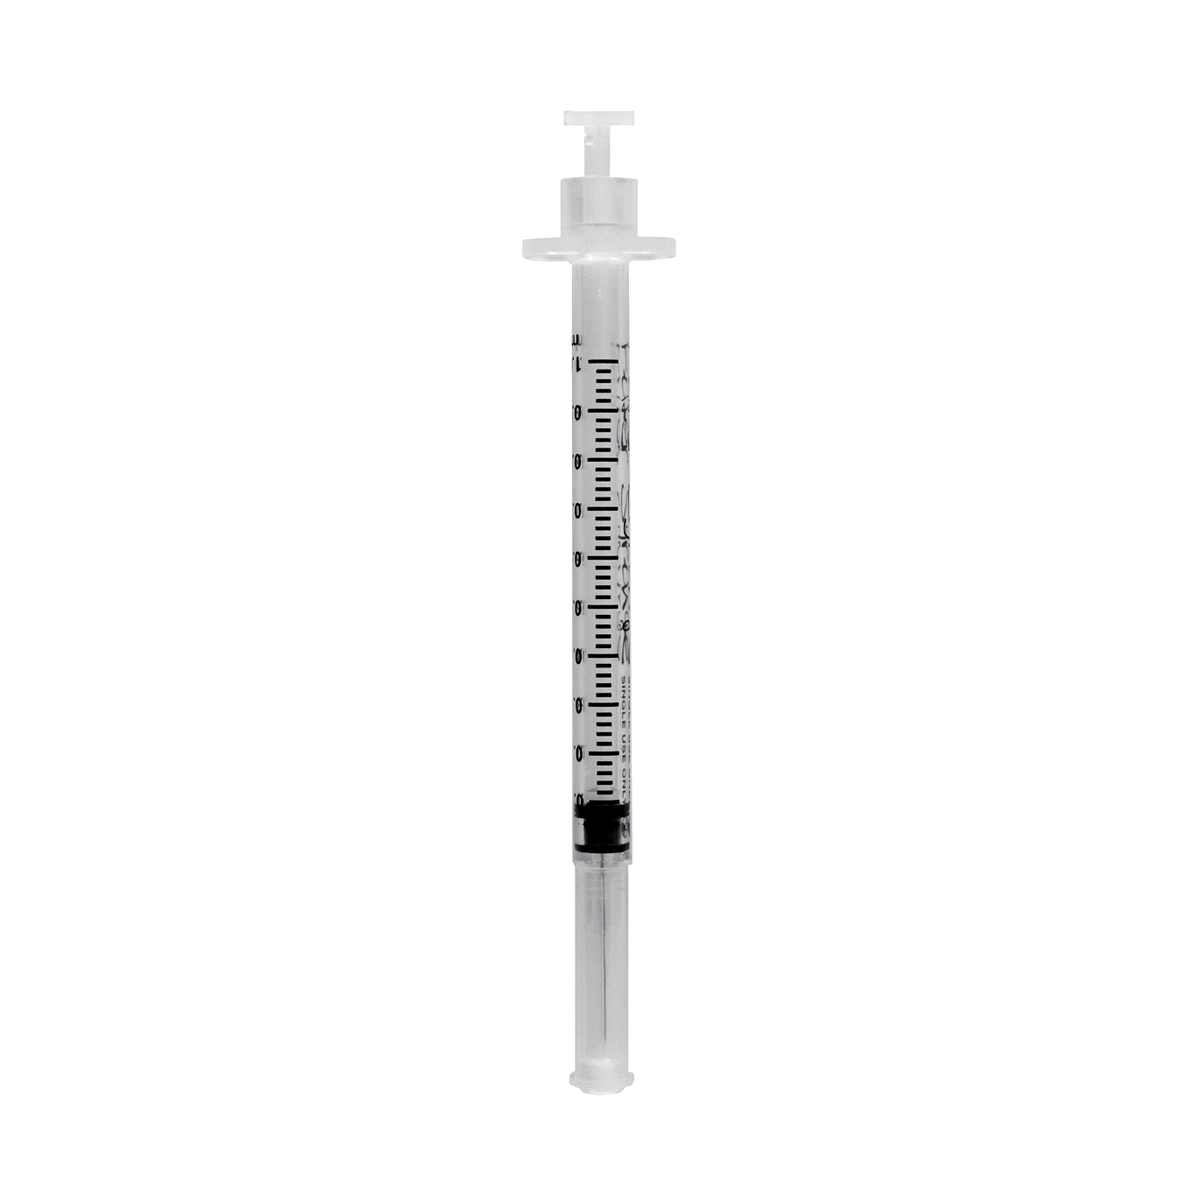 1ml fixed needle Frontier 'Filter Syringe